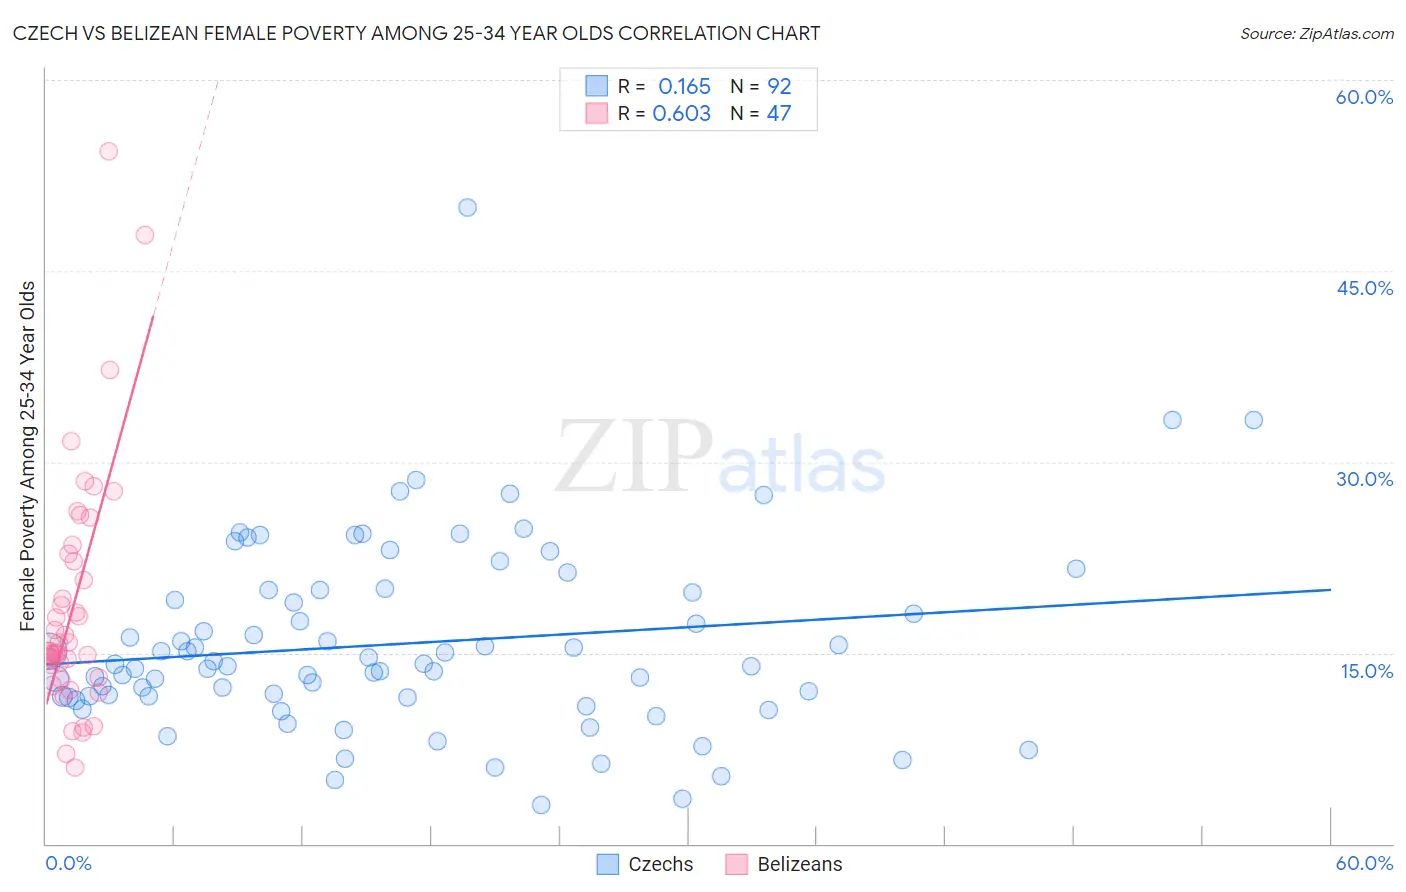 Czech vs Belizean Female Poverty Among 25-34 Year Olds